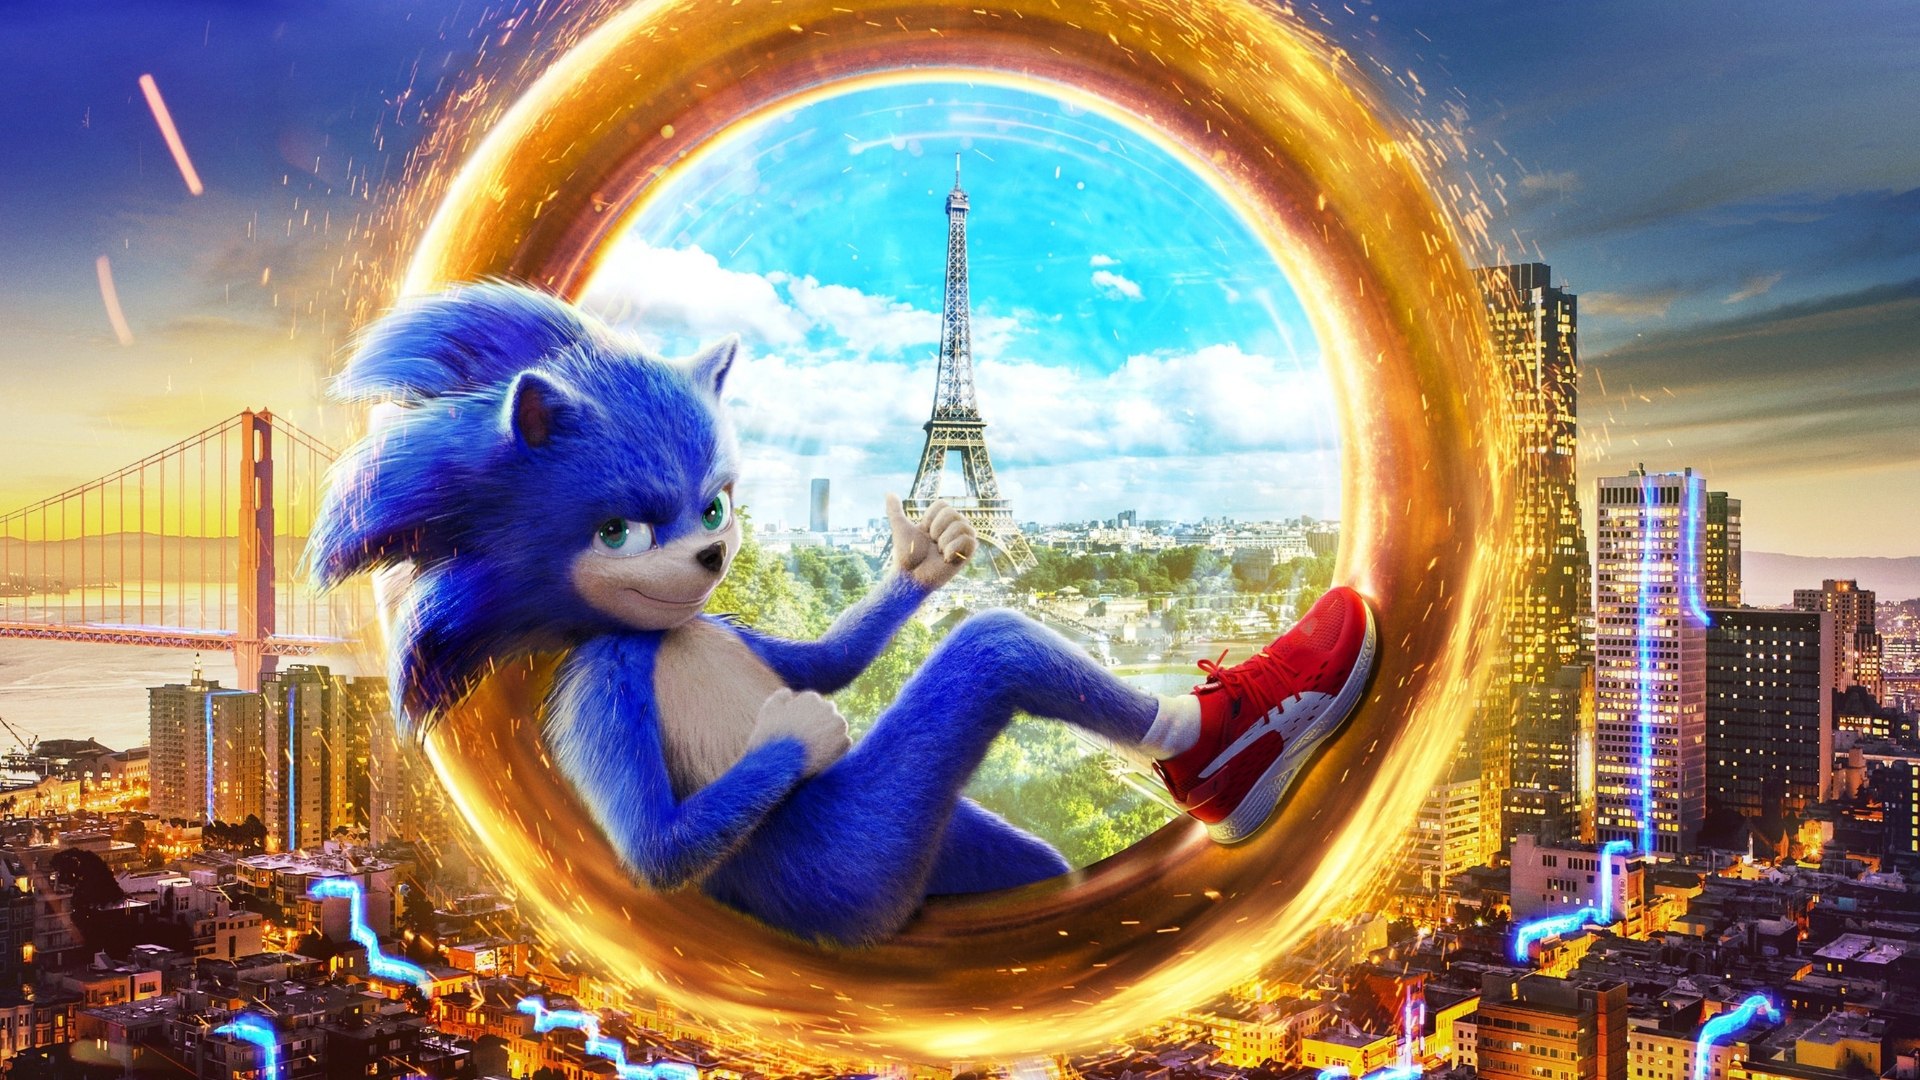 Sonic the Hedgehog Trailer #1 (2019)